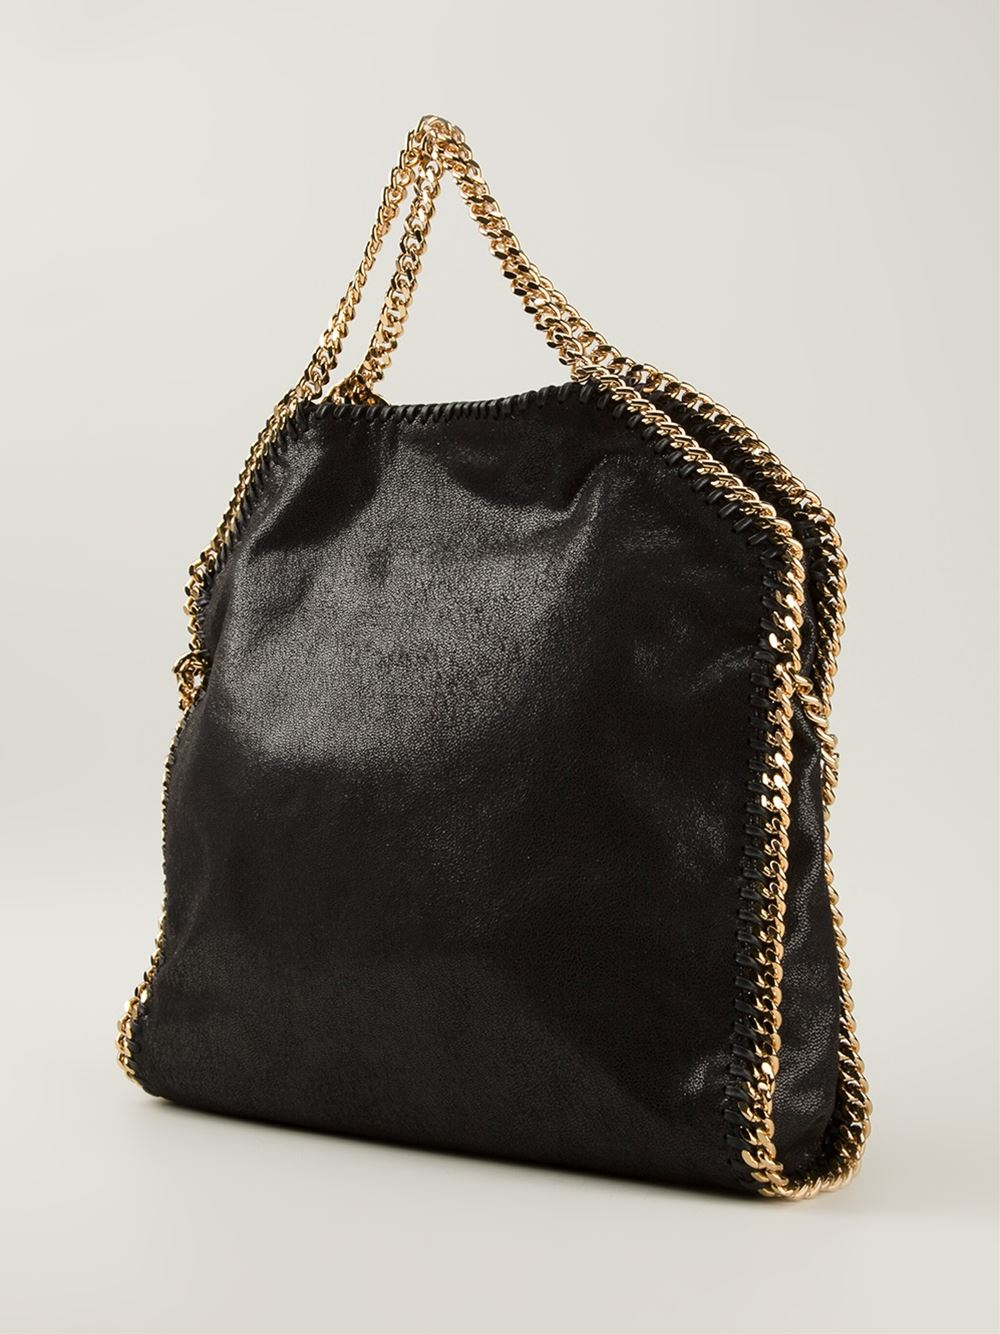 Stella McCartney Leather 3 Chain Falabella Bag in Black | Lyst